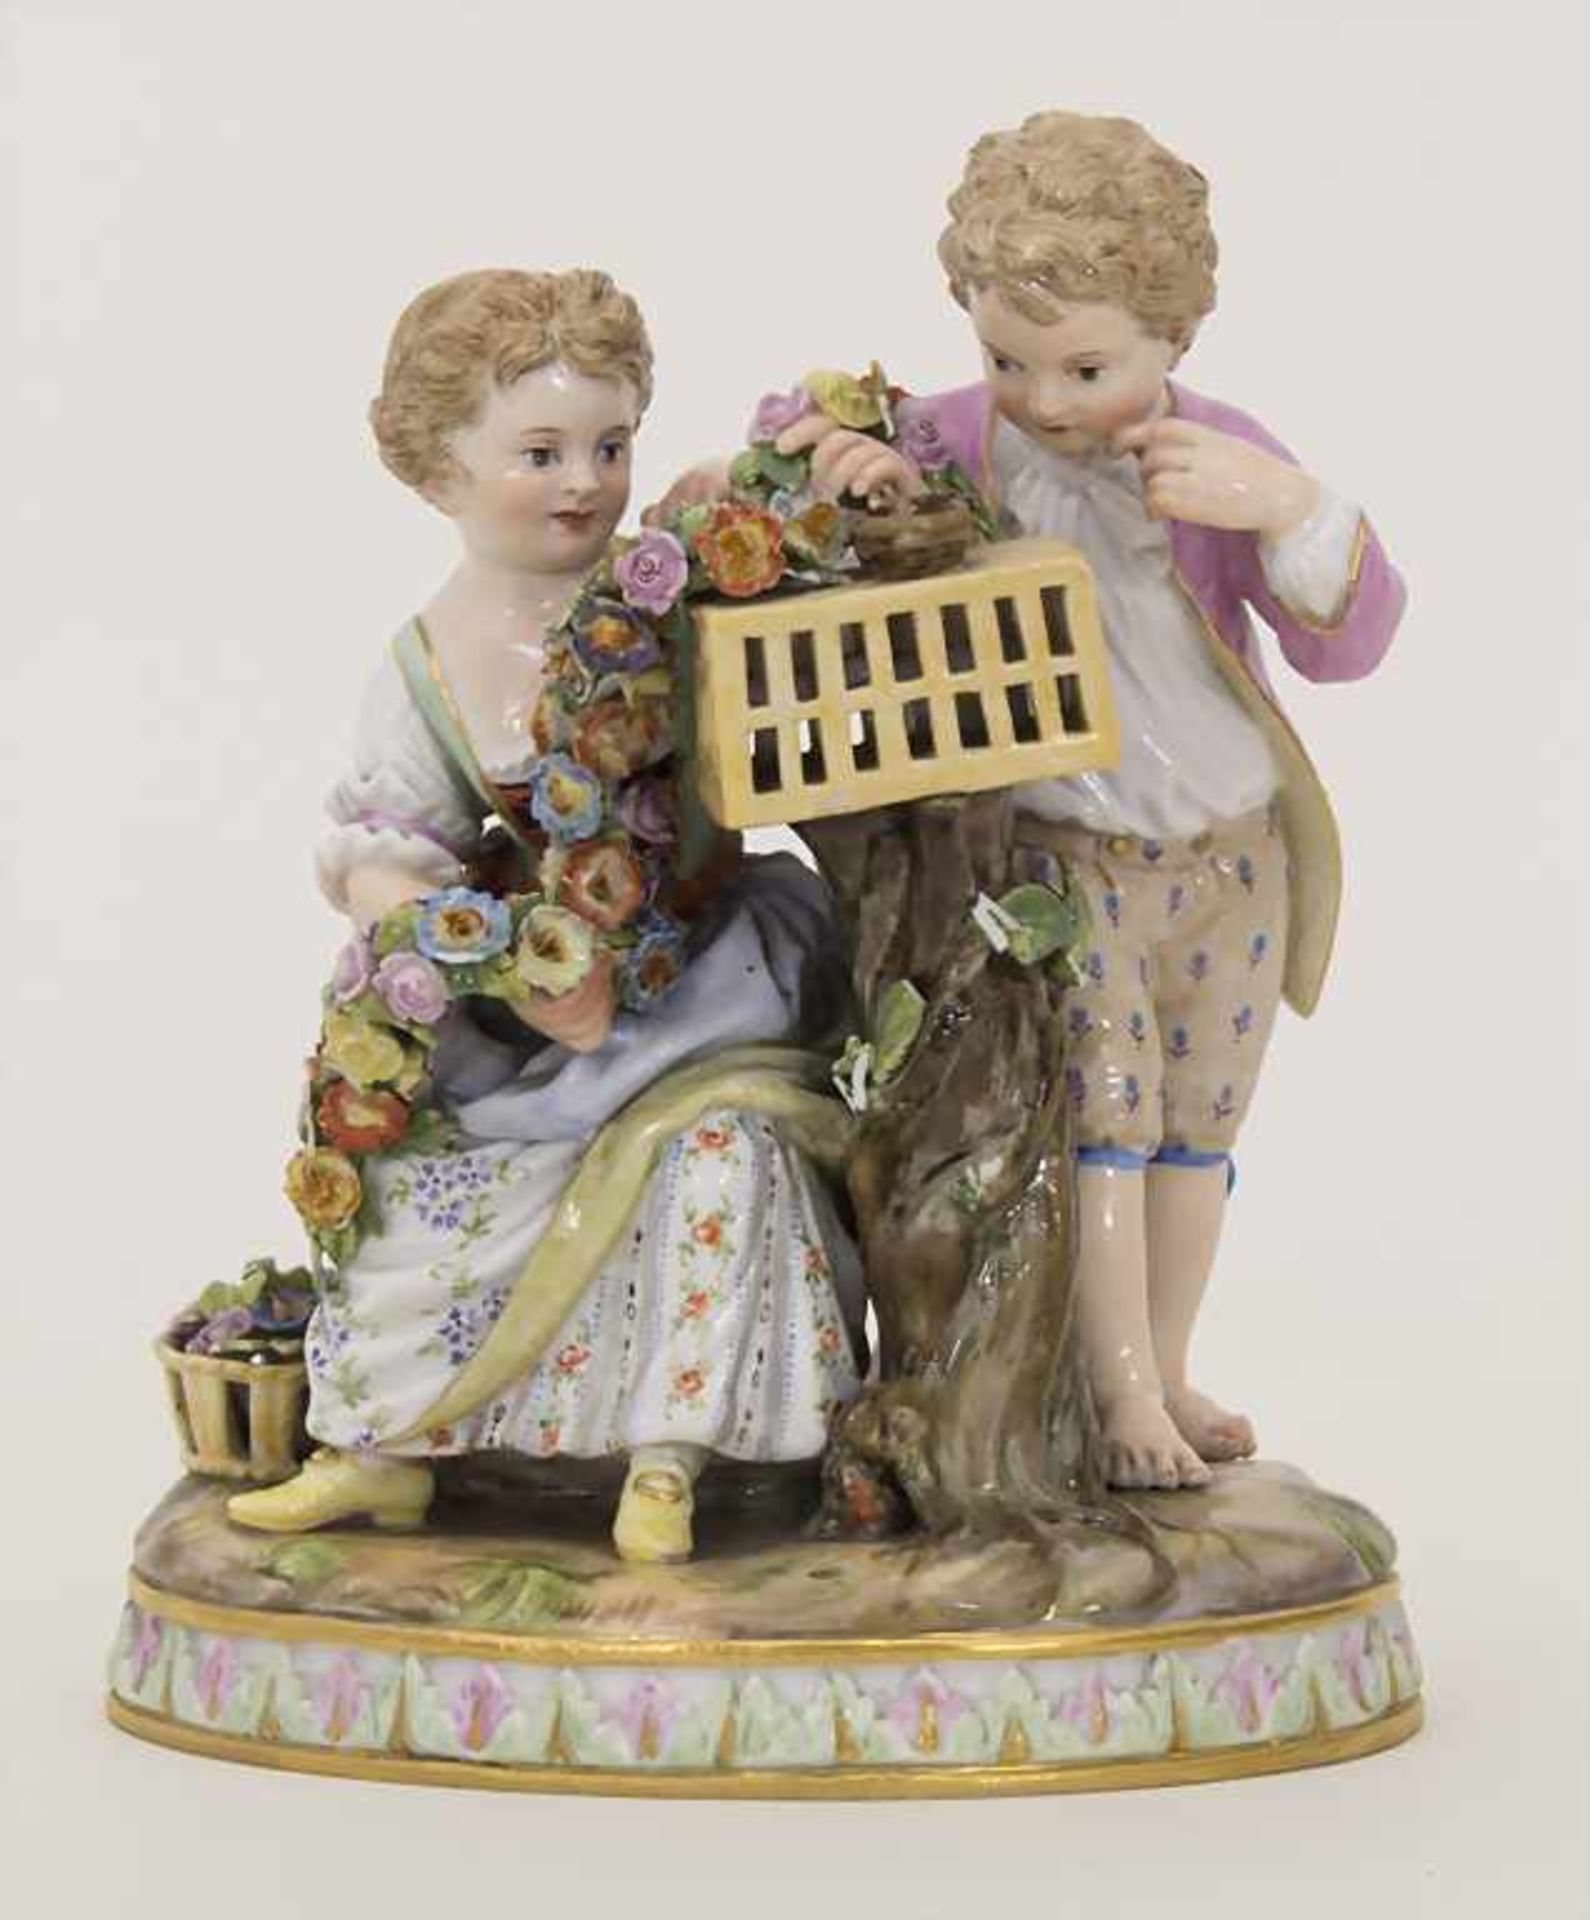 Gärtnerkinder 'Der Frühling' / Gardener's children 'The spring', Meissen, 1860-1924Material: